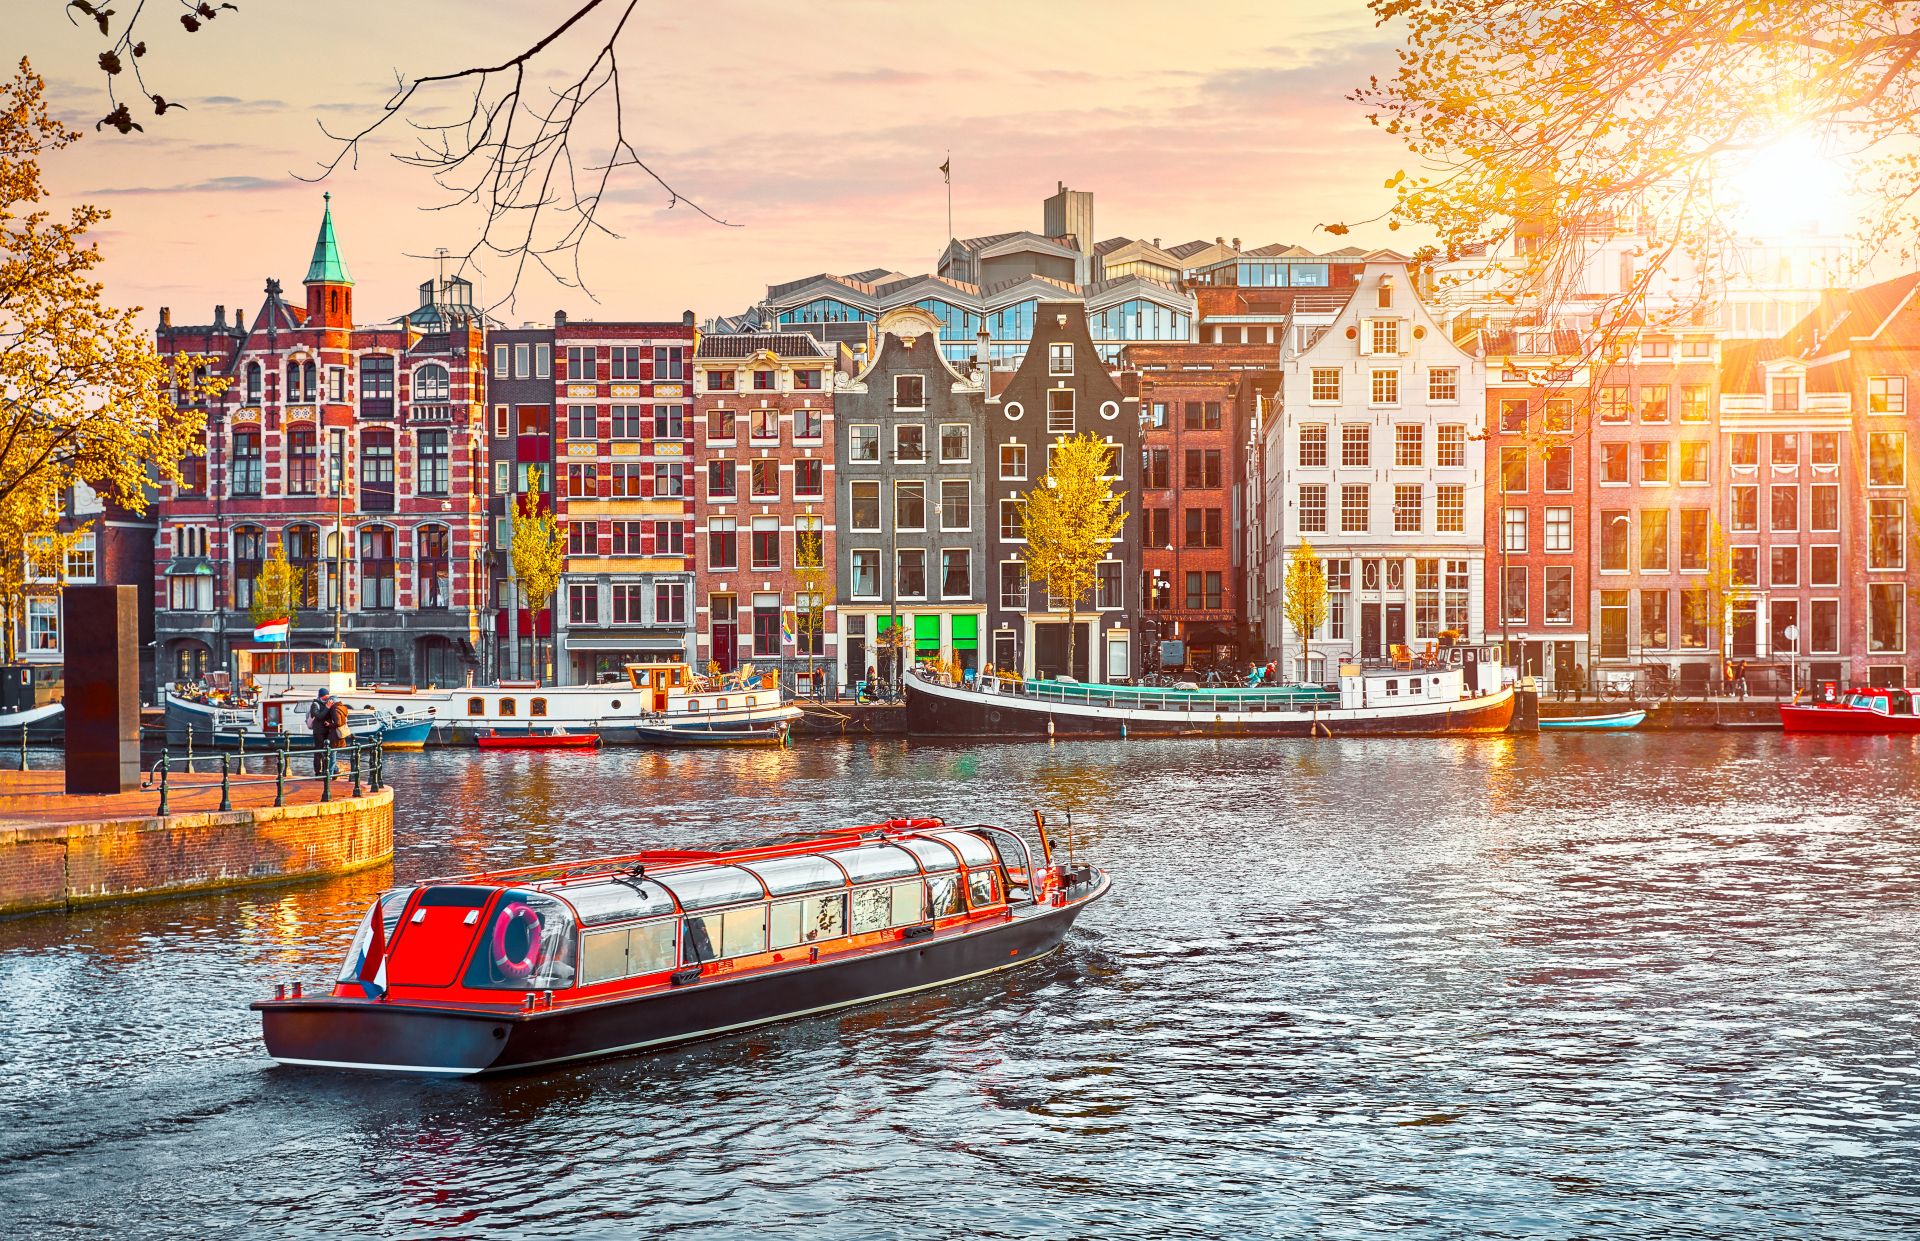 Le canal d'Amsterdam en Hollande